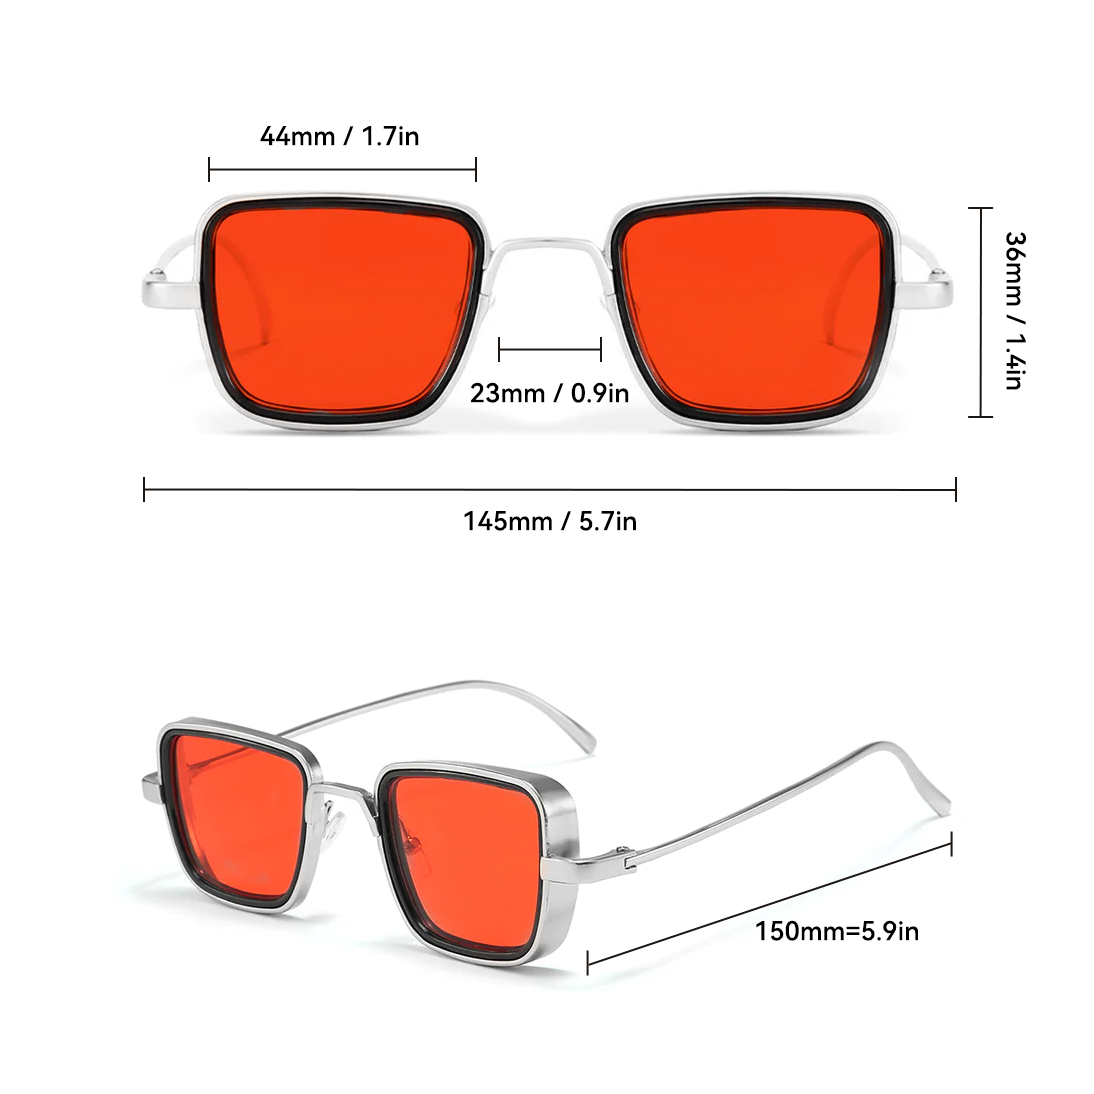 Dollger Metal Square Frame Sunglasses